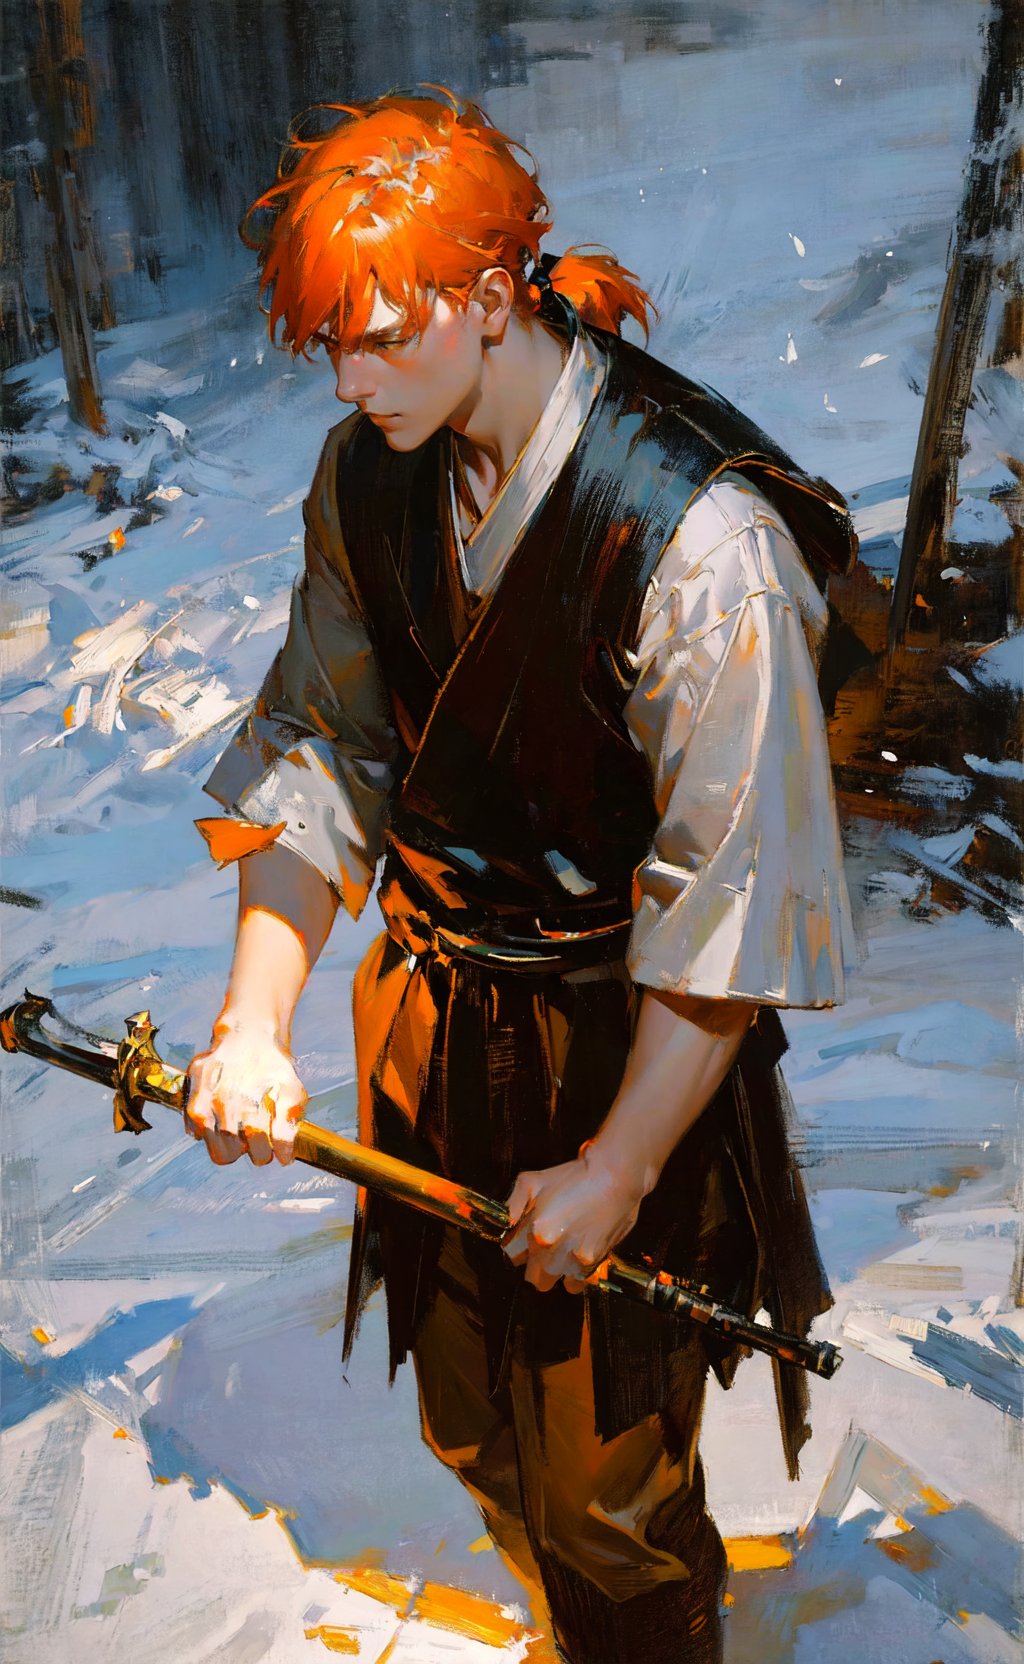 oil painting, Dean Cornwell, masterpiece, best quality, 1boy, samurai, short orange hair, ponytail, winter, snow, snowing, snowflakes, volumetric lighting, rim lighting